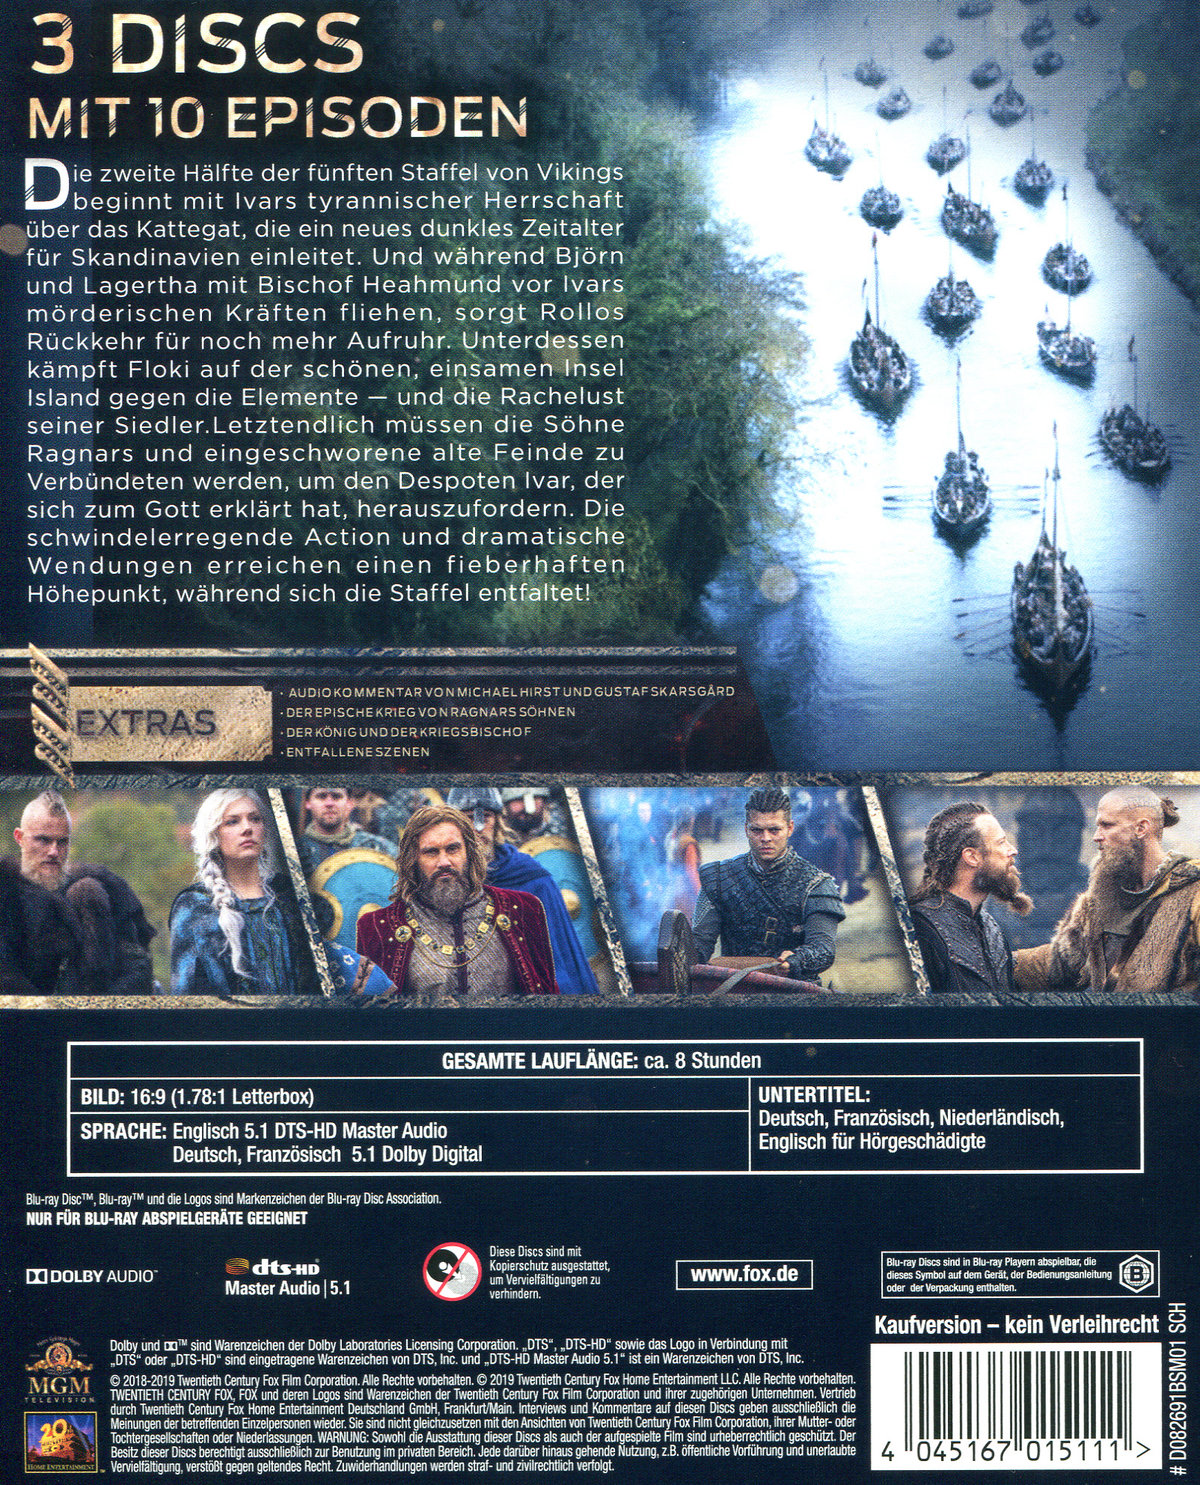 Vikings - Season 5.2  [3 BRs]  (Blu-ray Disc)